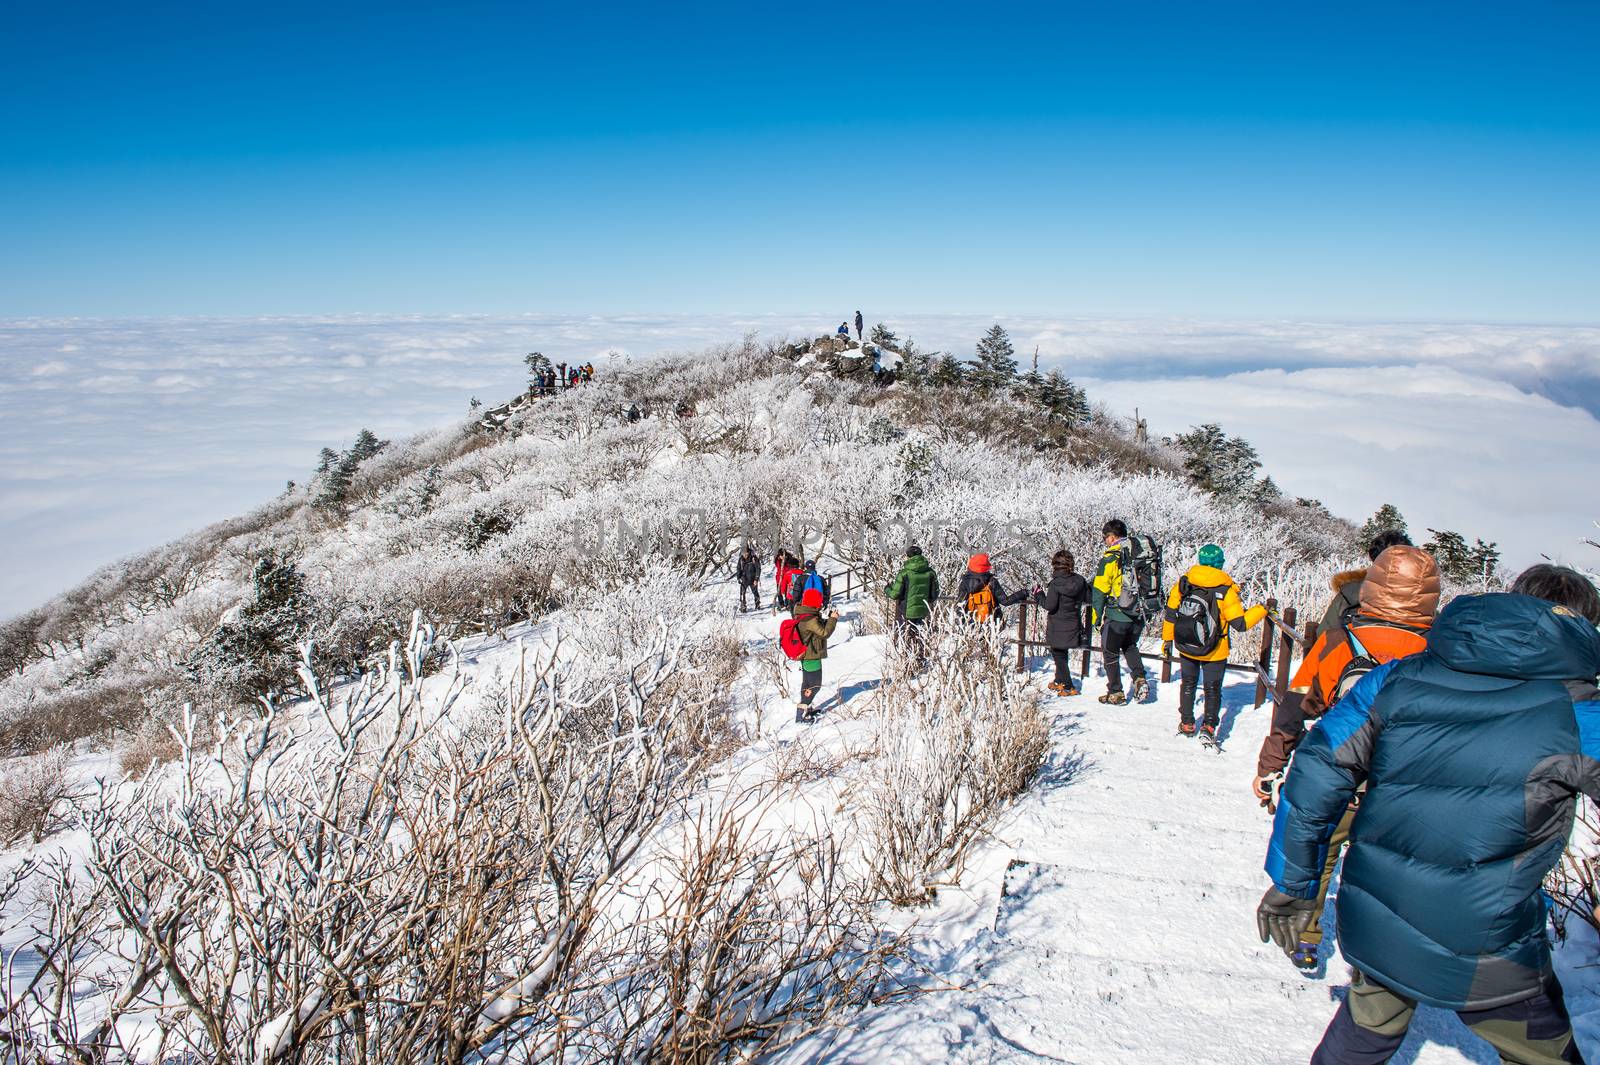 DEOGYUSAN,KOREA - JANUARY 23: Tourists taking photos of the beautiful scenery around Deogyusan,South Korea on January 23, 2015.